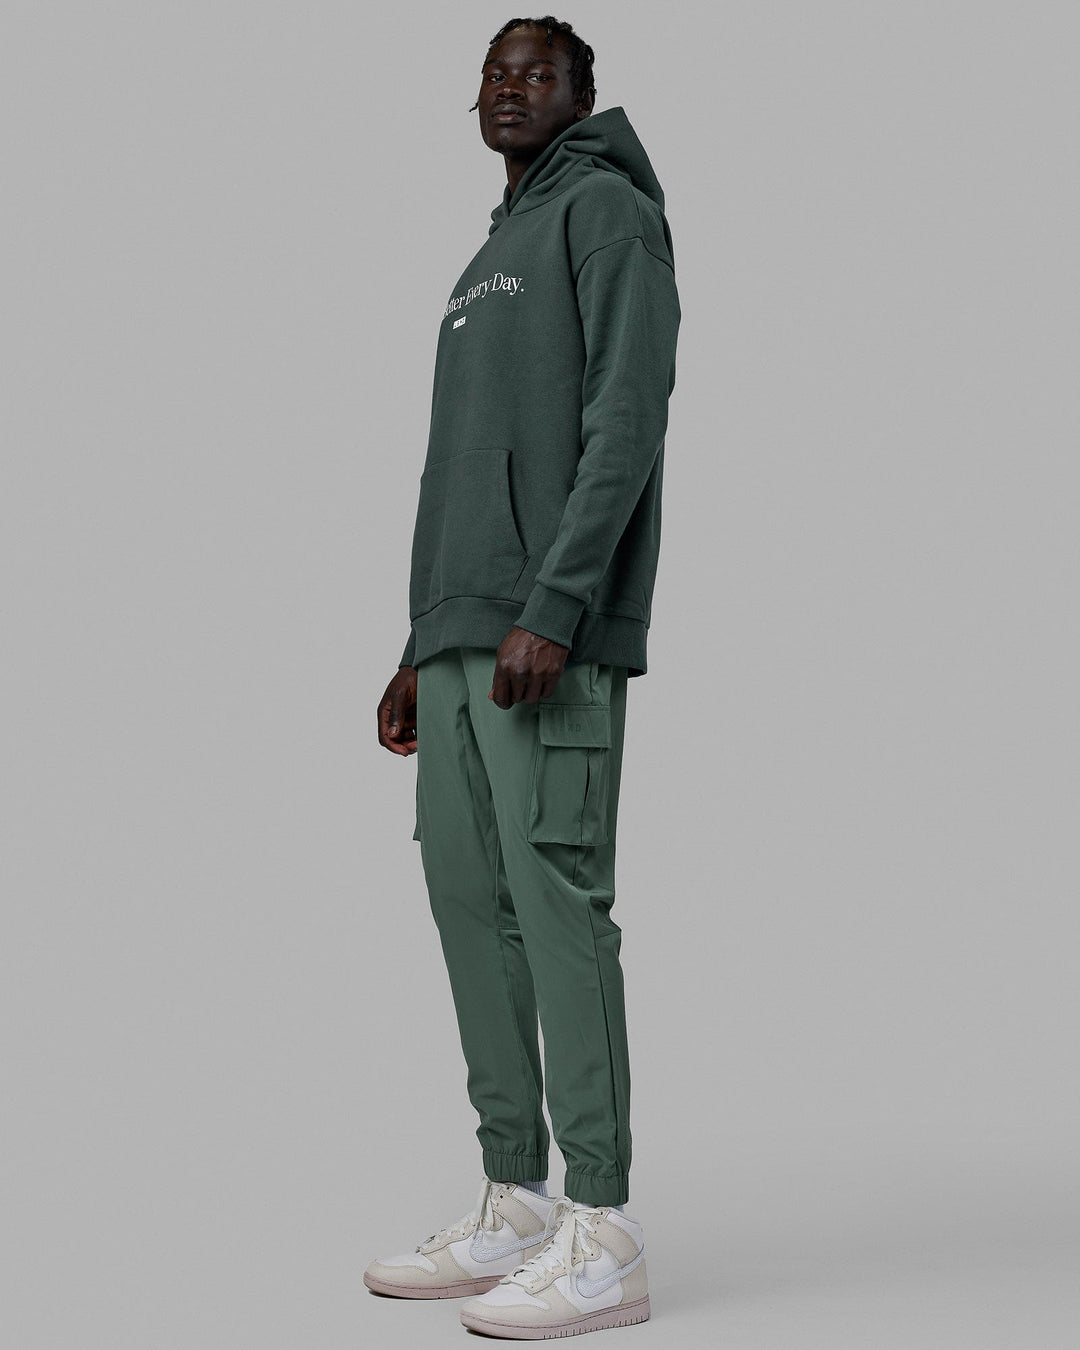 Man wearing Unisex 1% Better Hoodie Oversize - Vital Green